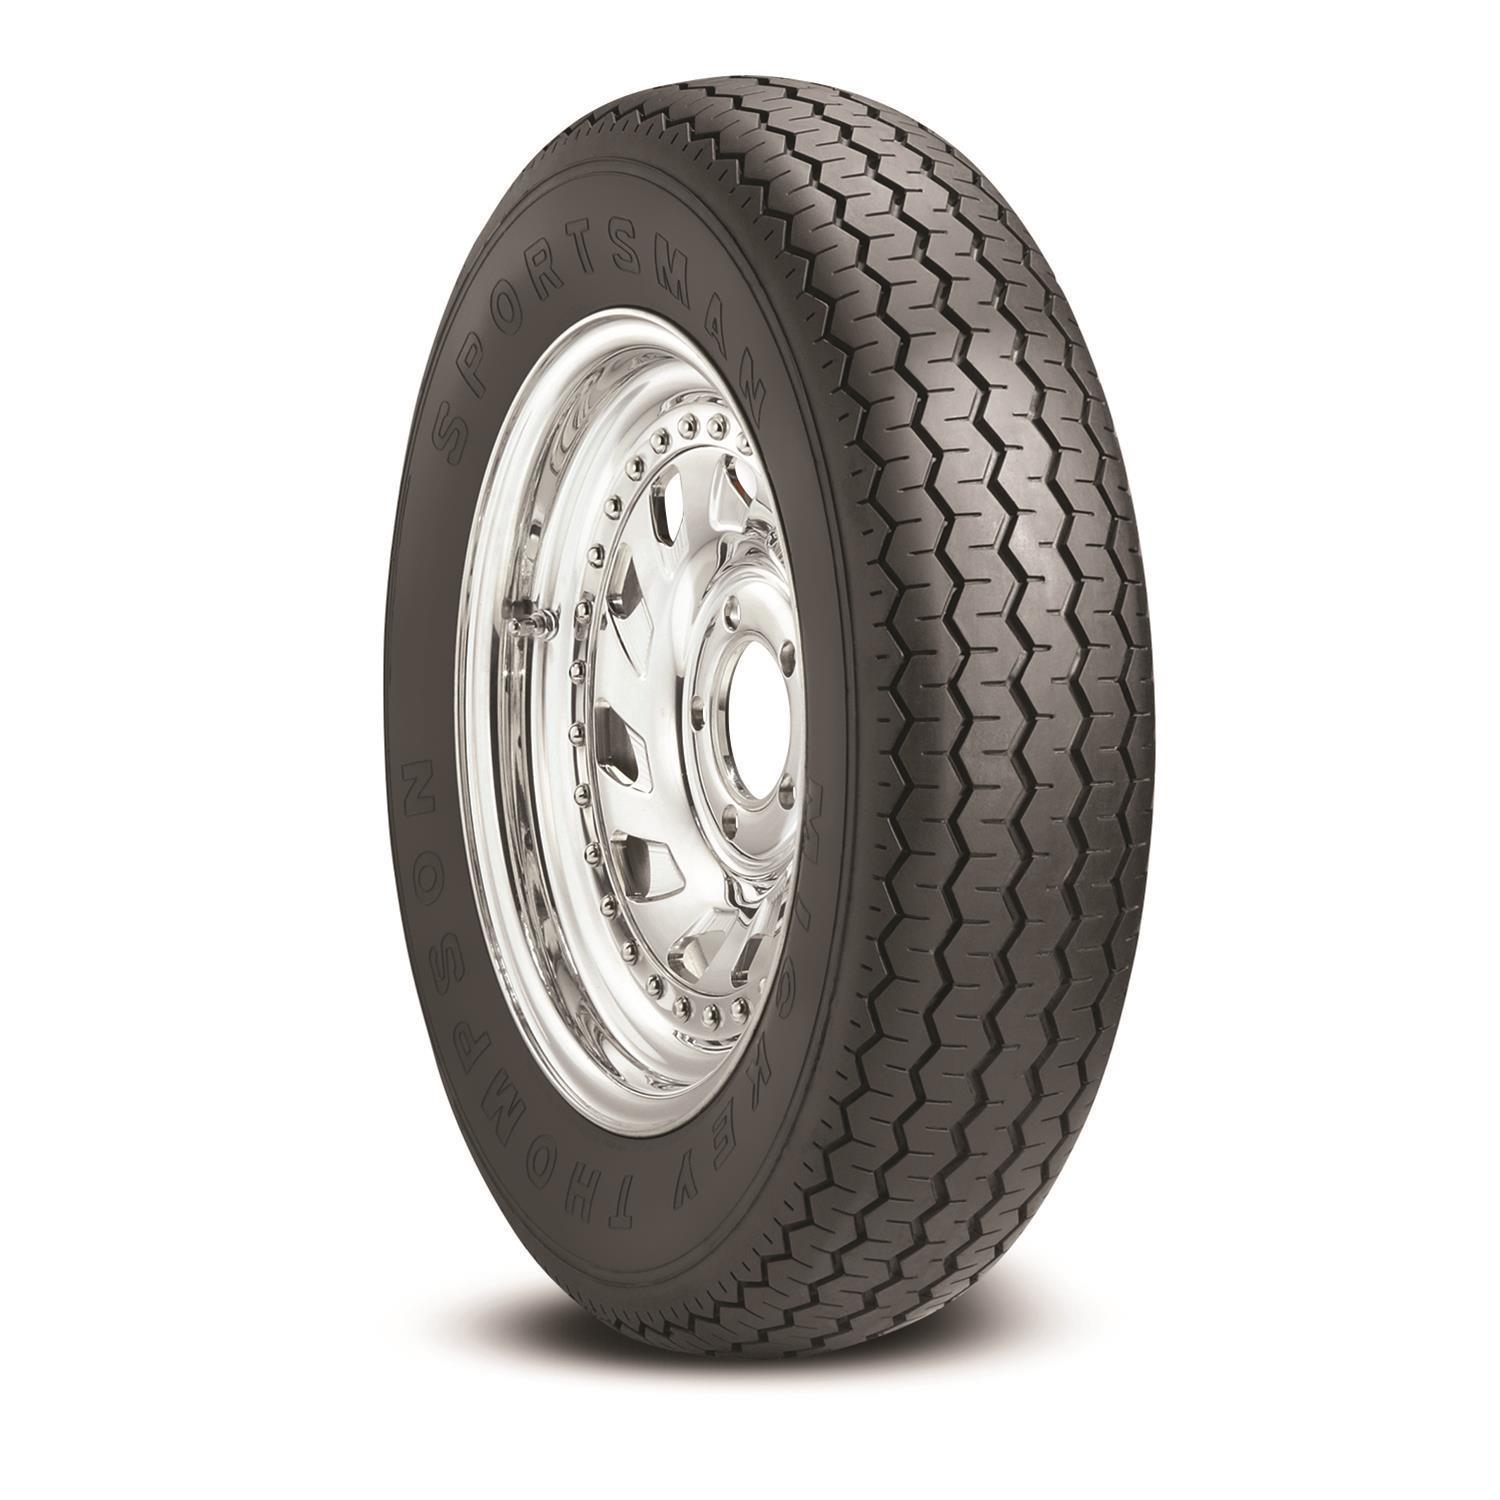 26x7.50-15LT Sportsman Front Tire - Burlile Performance Products